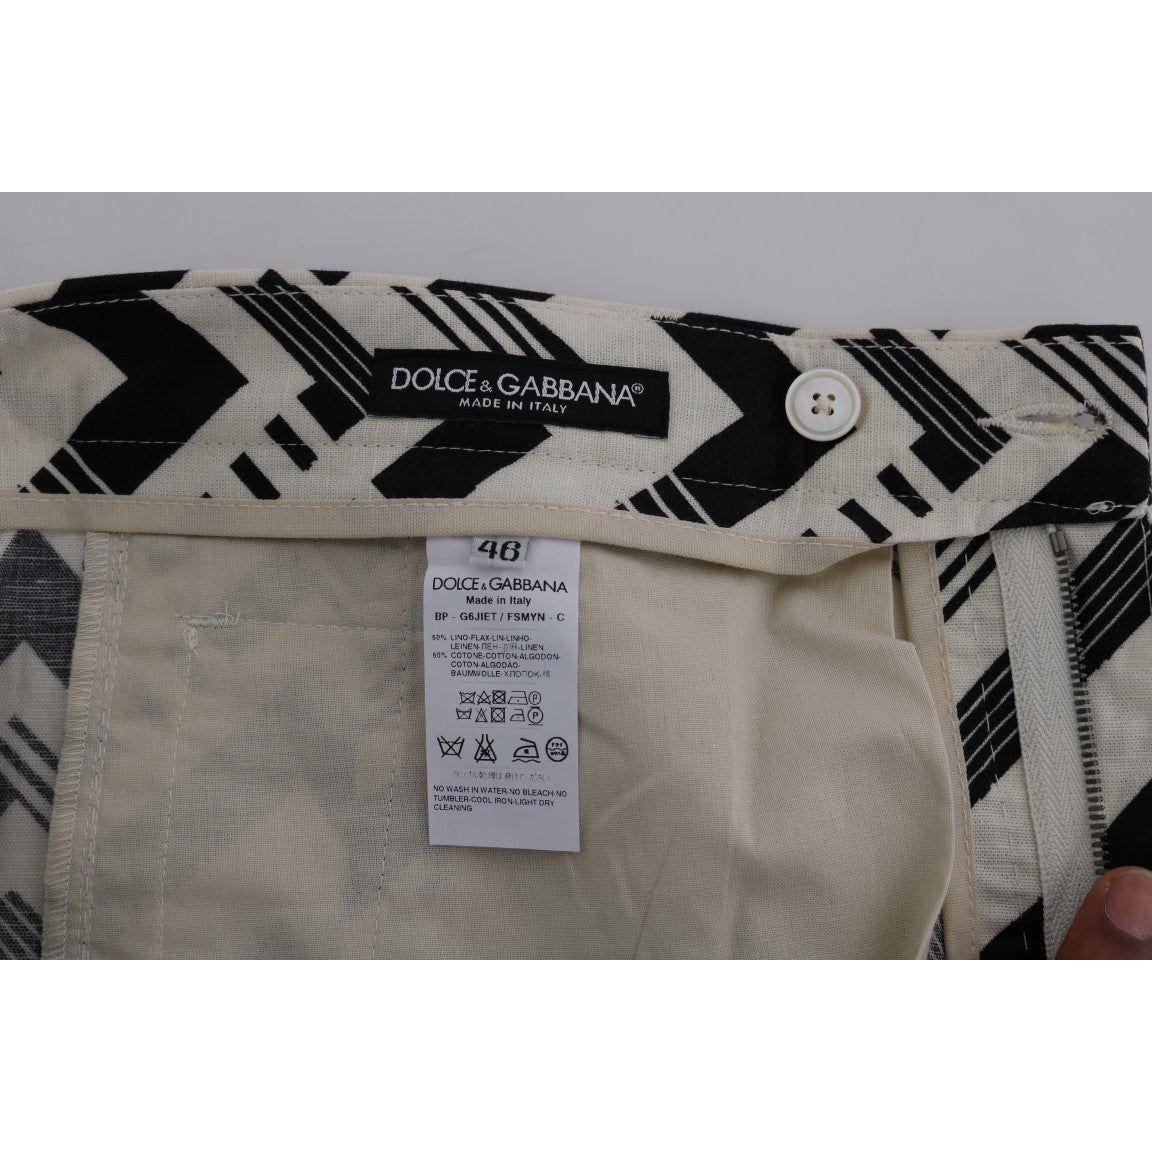 Dolce & Gabbana Striped Casual Knee-High Shorts white-black-striped-cotton-linen-shorts